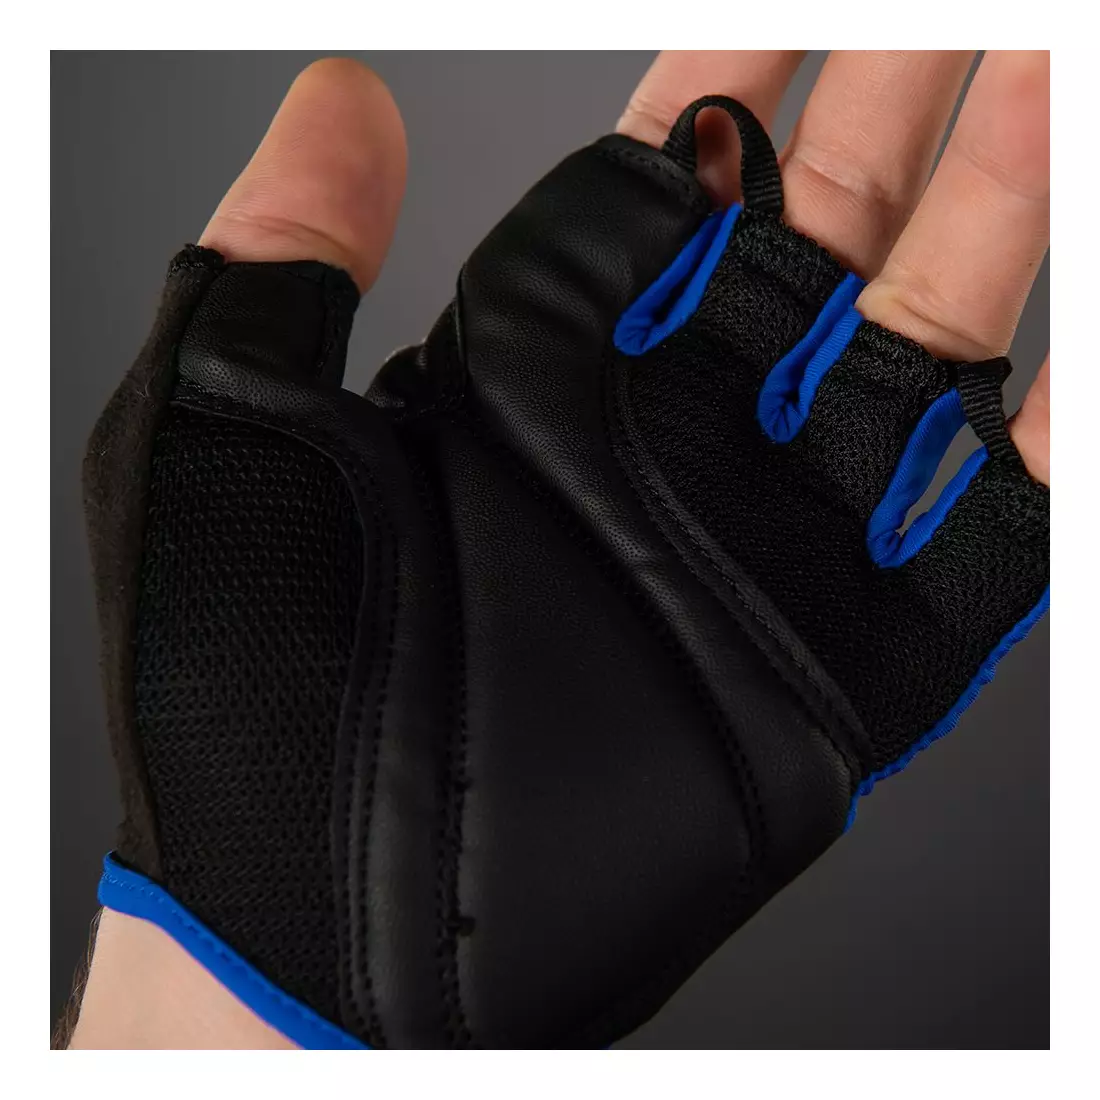 CHIBA SPORT PRO cycling gloves, blue white 3040218